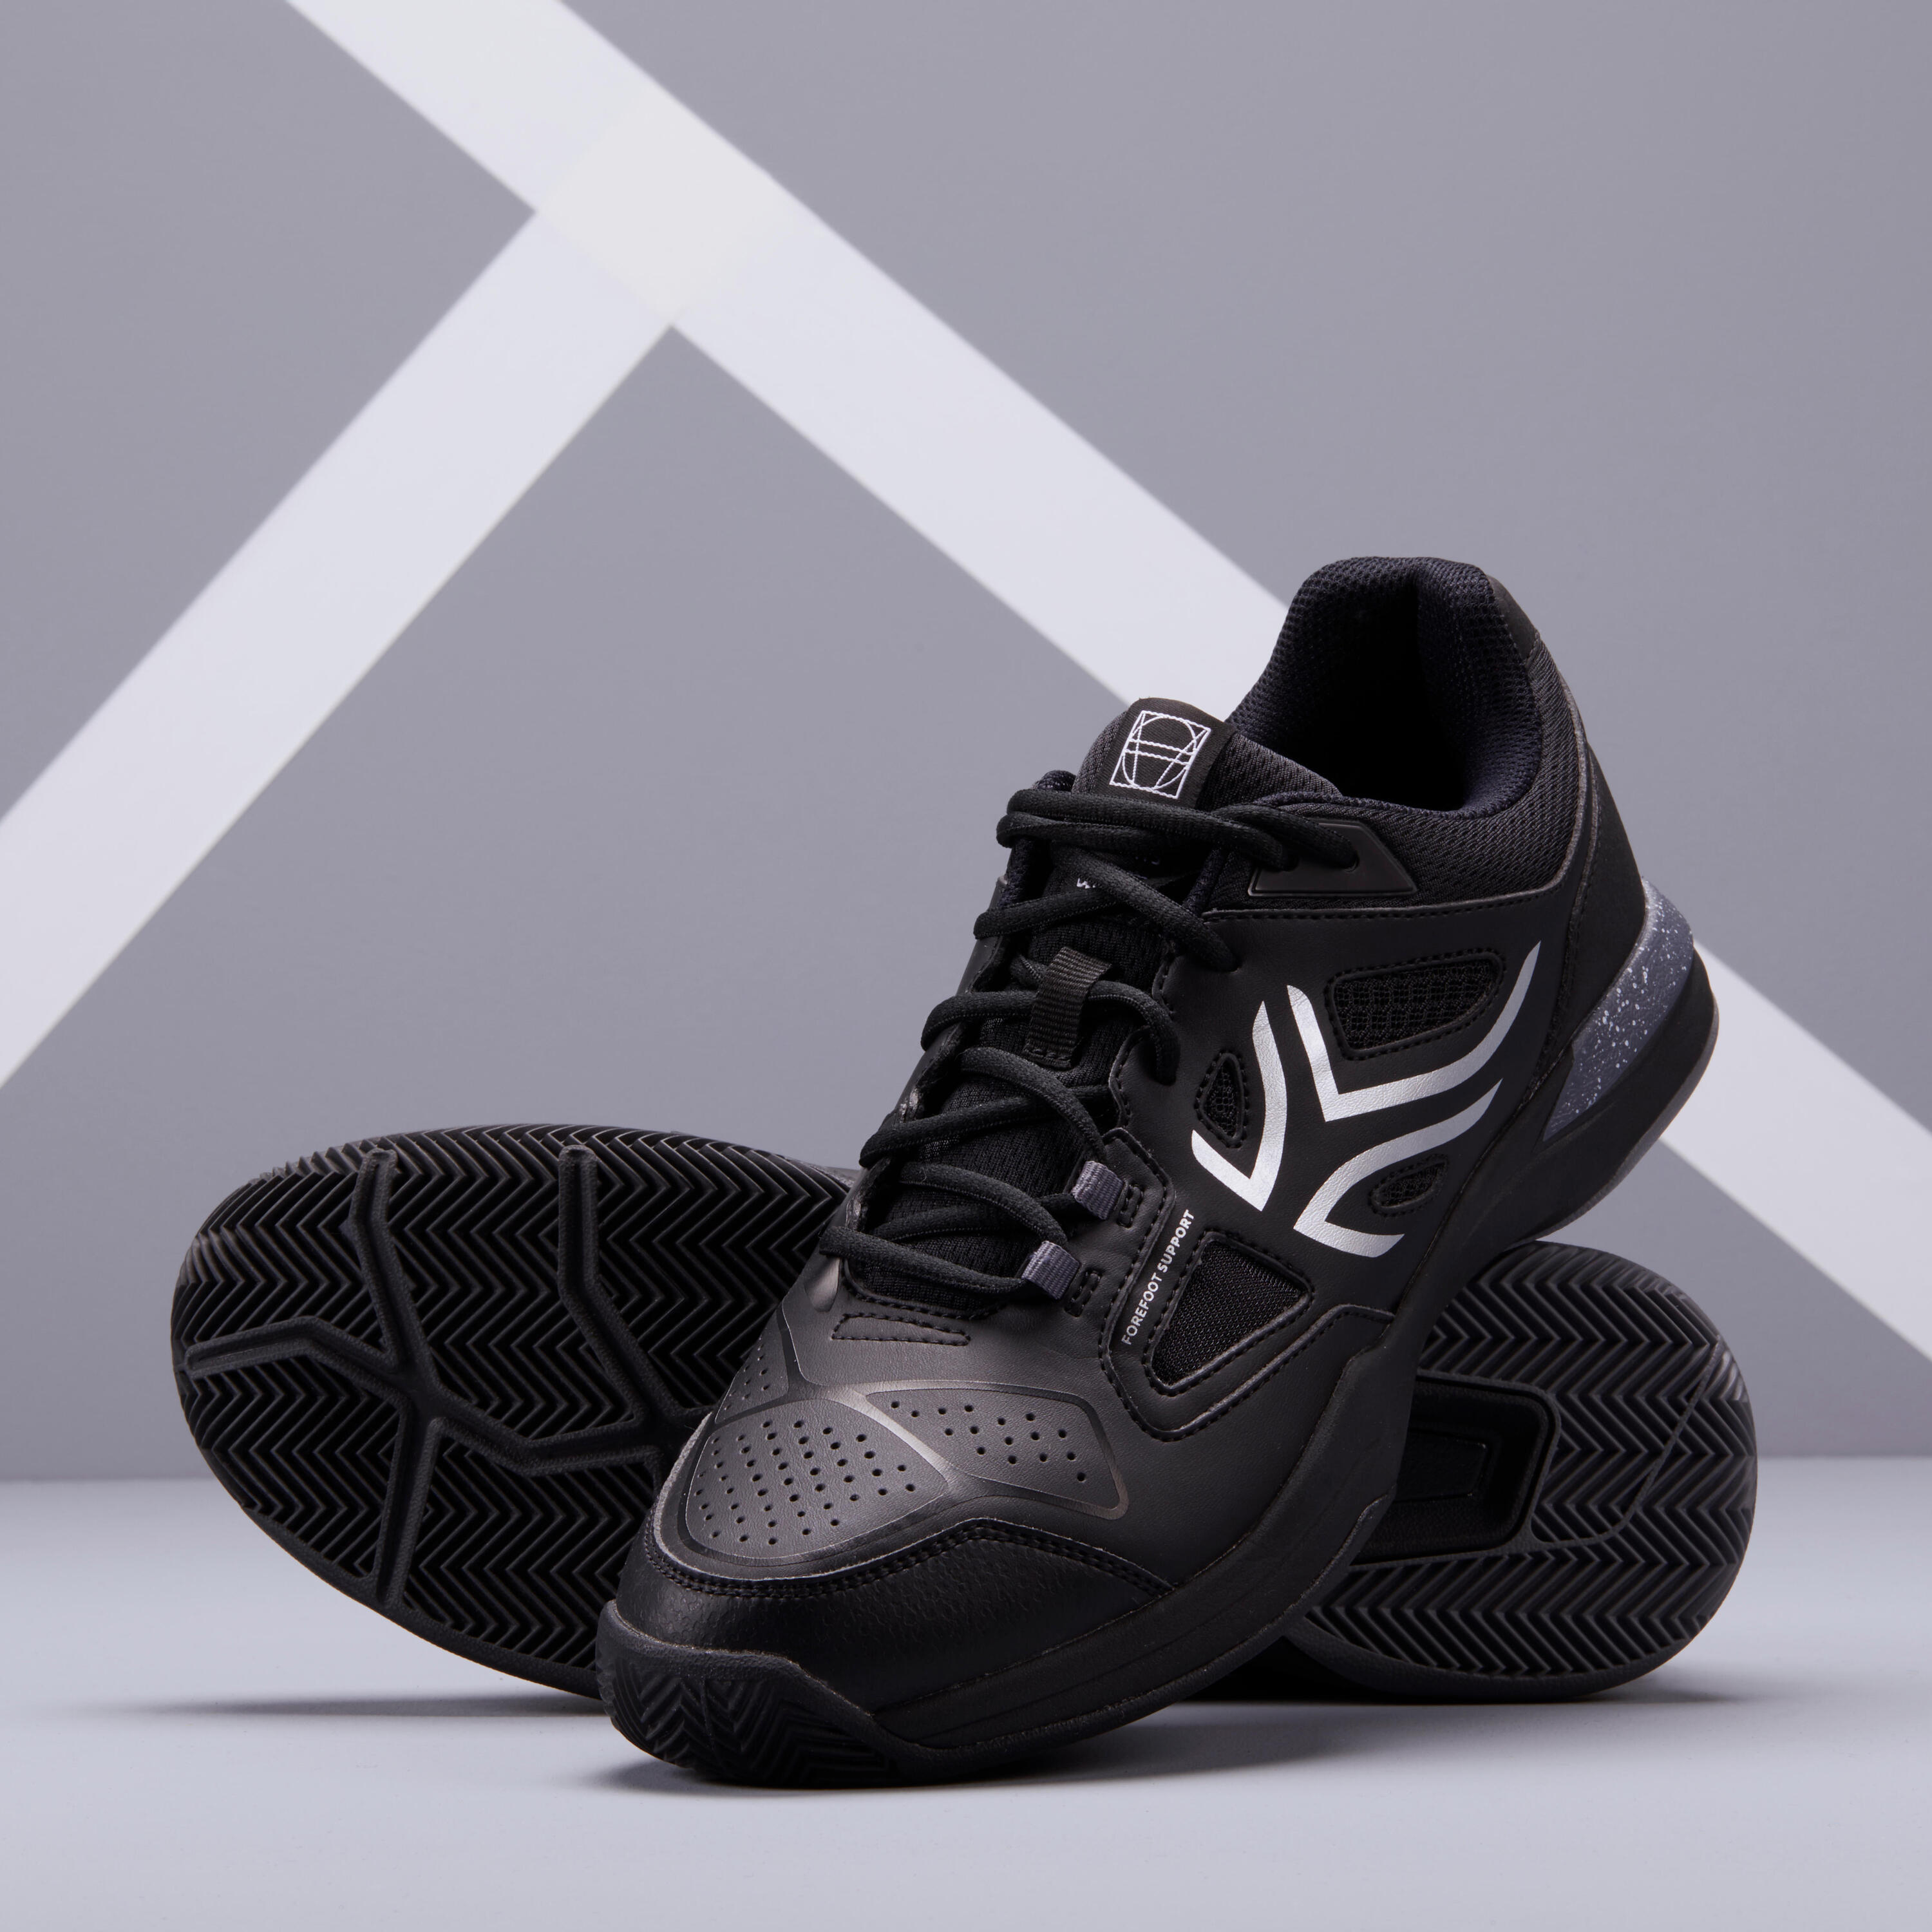 Men's Clay Court Tennis Shoes TS 500 - Black/Grey 6/8